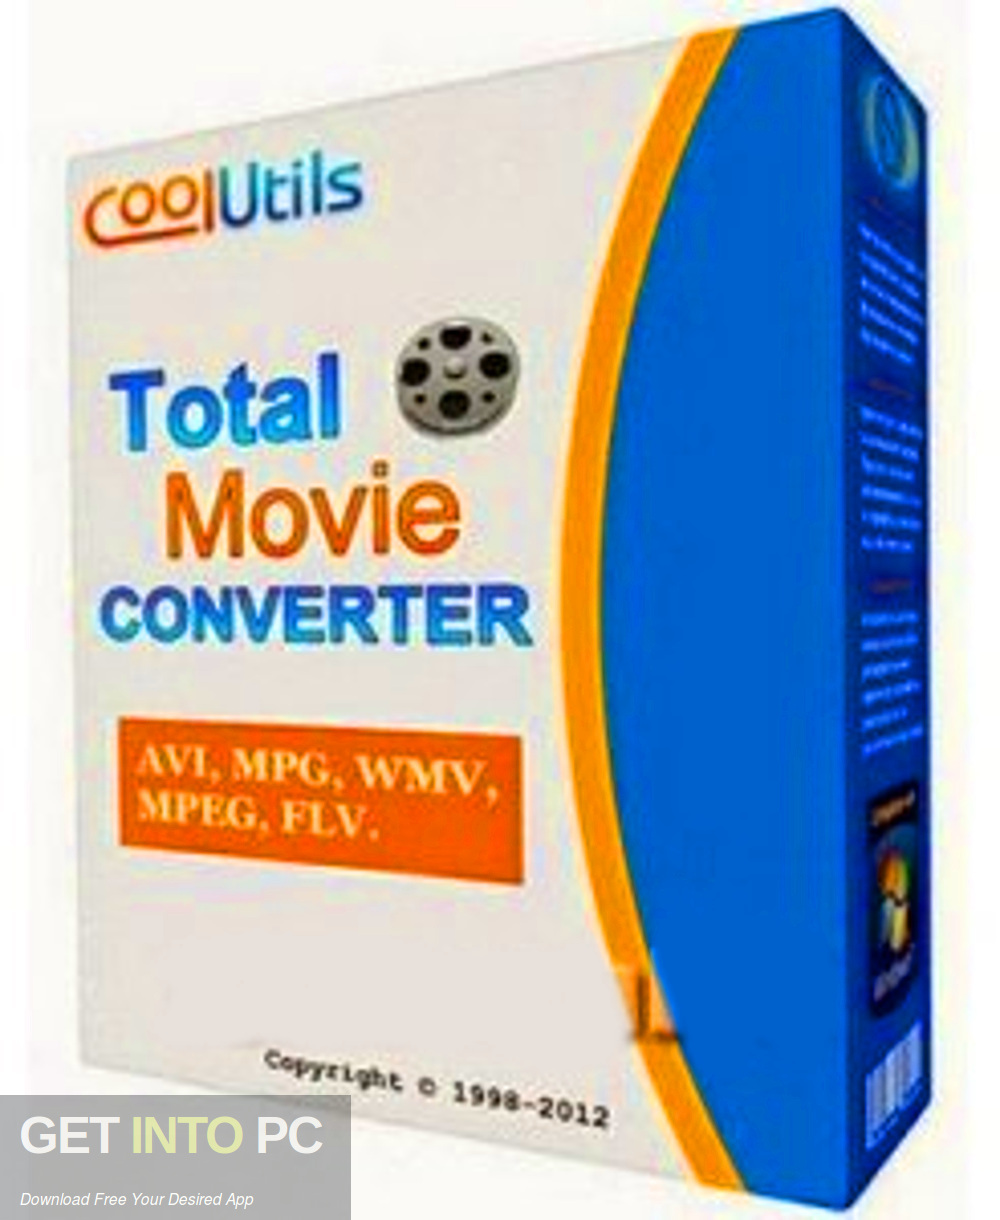 Coolutils Total Movie Converter 2020 Free Download GetintoPC.com